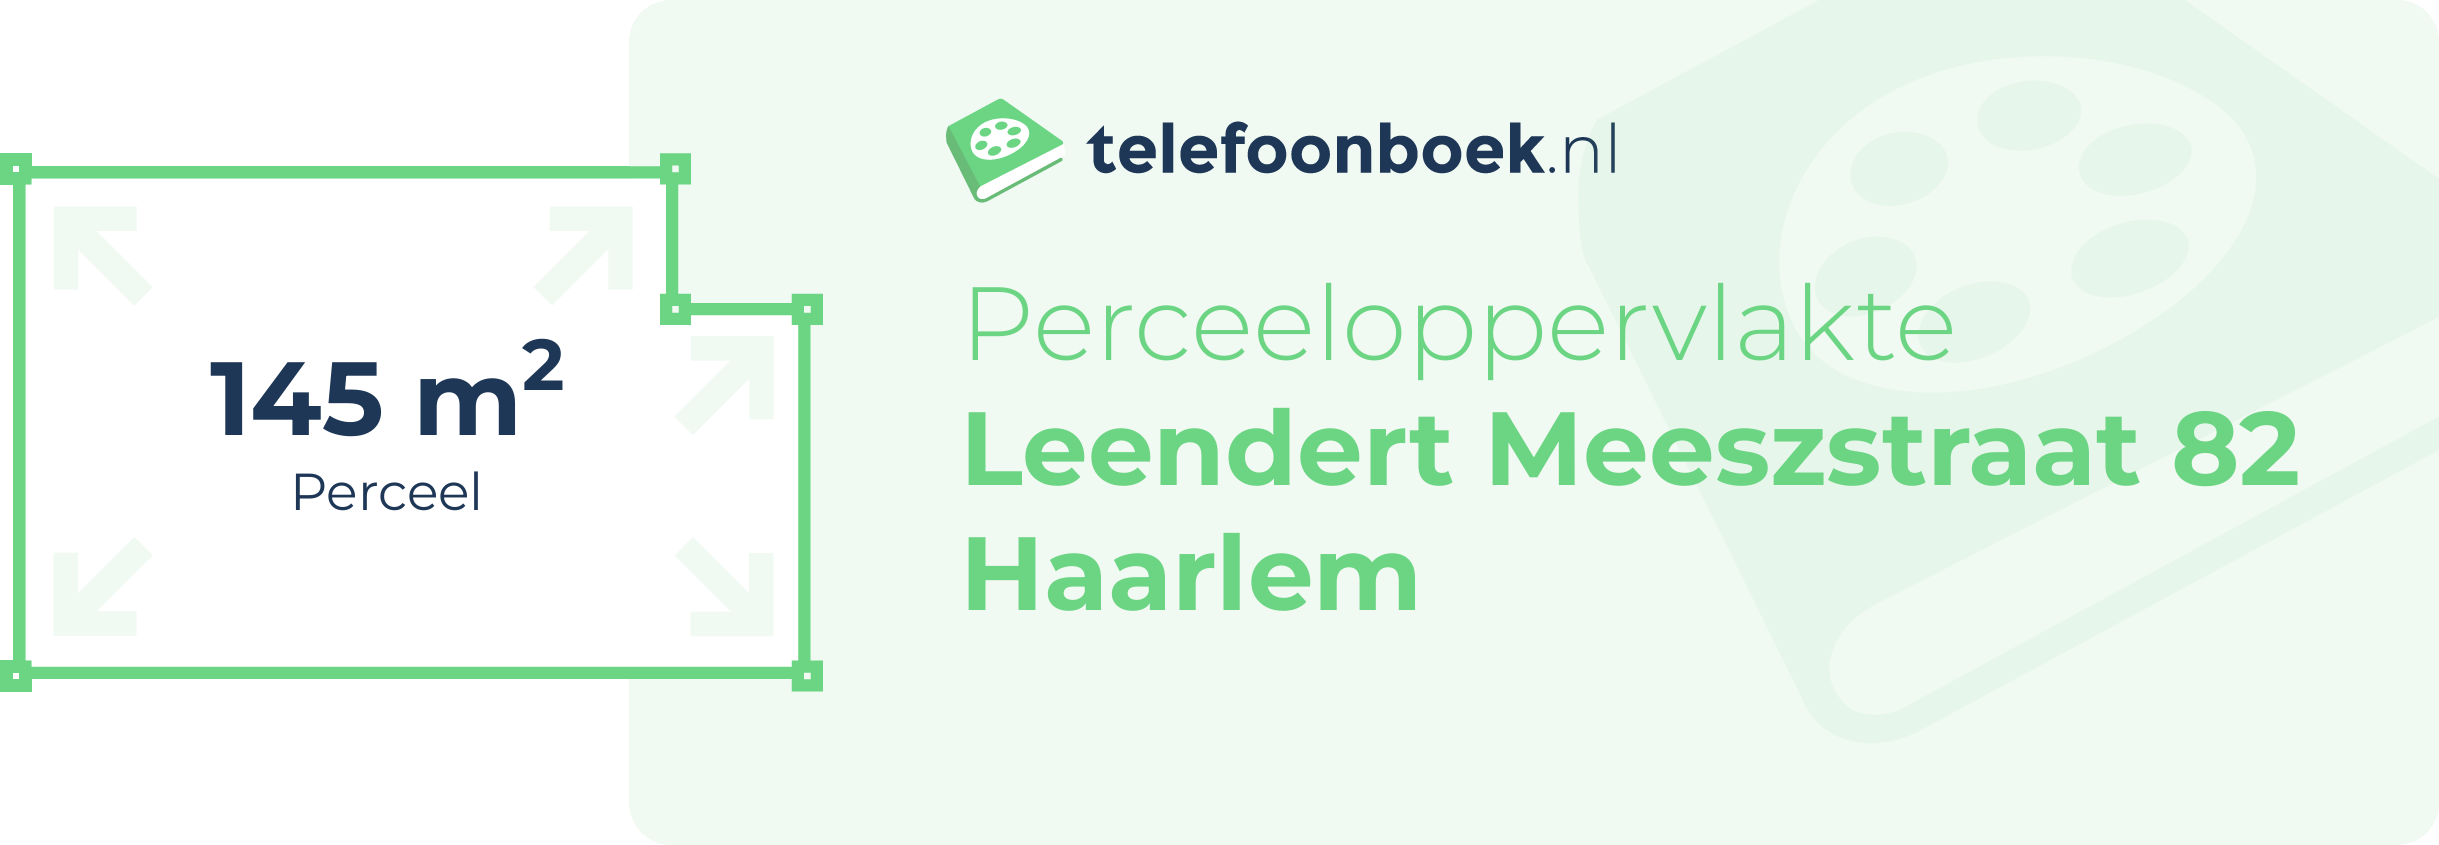 Perceeloppervlakte Leendert Meeszstraat 82 Haarlem